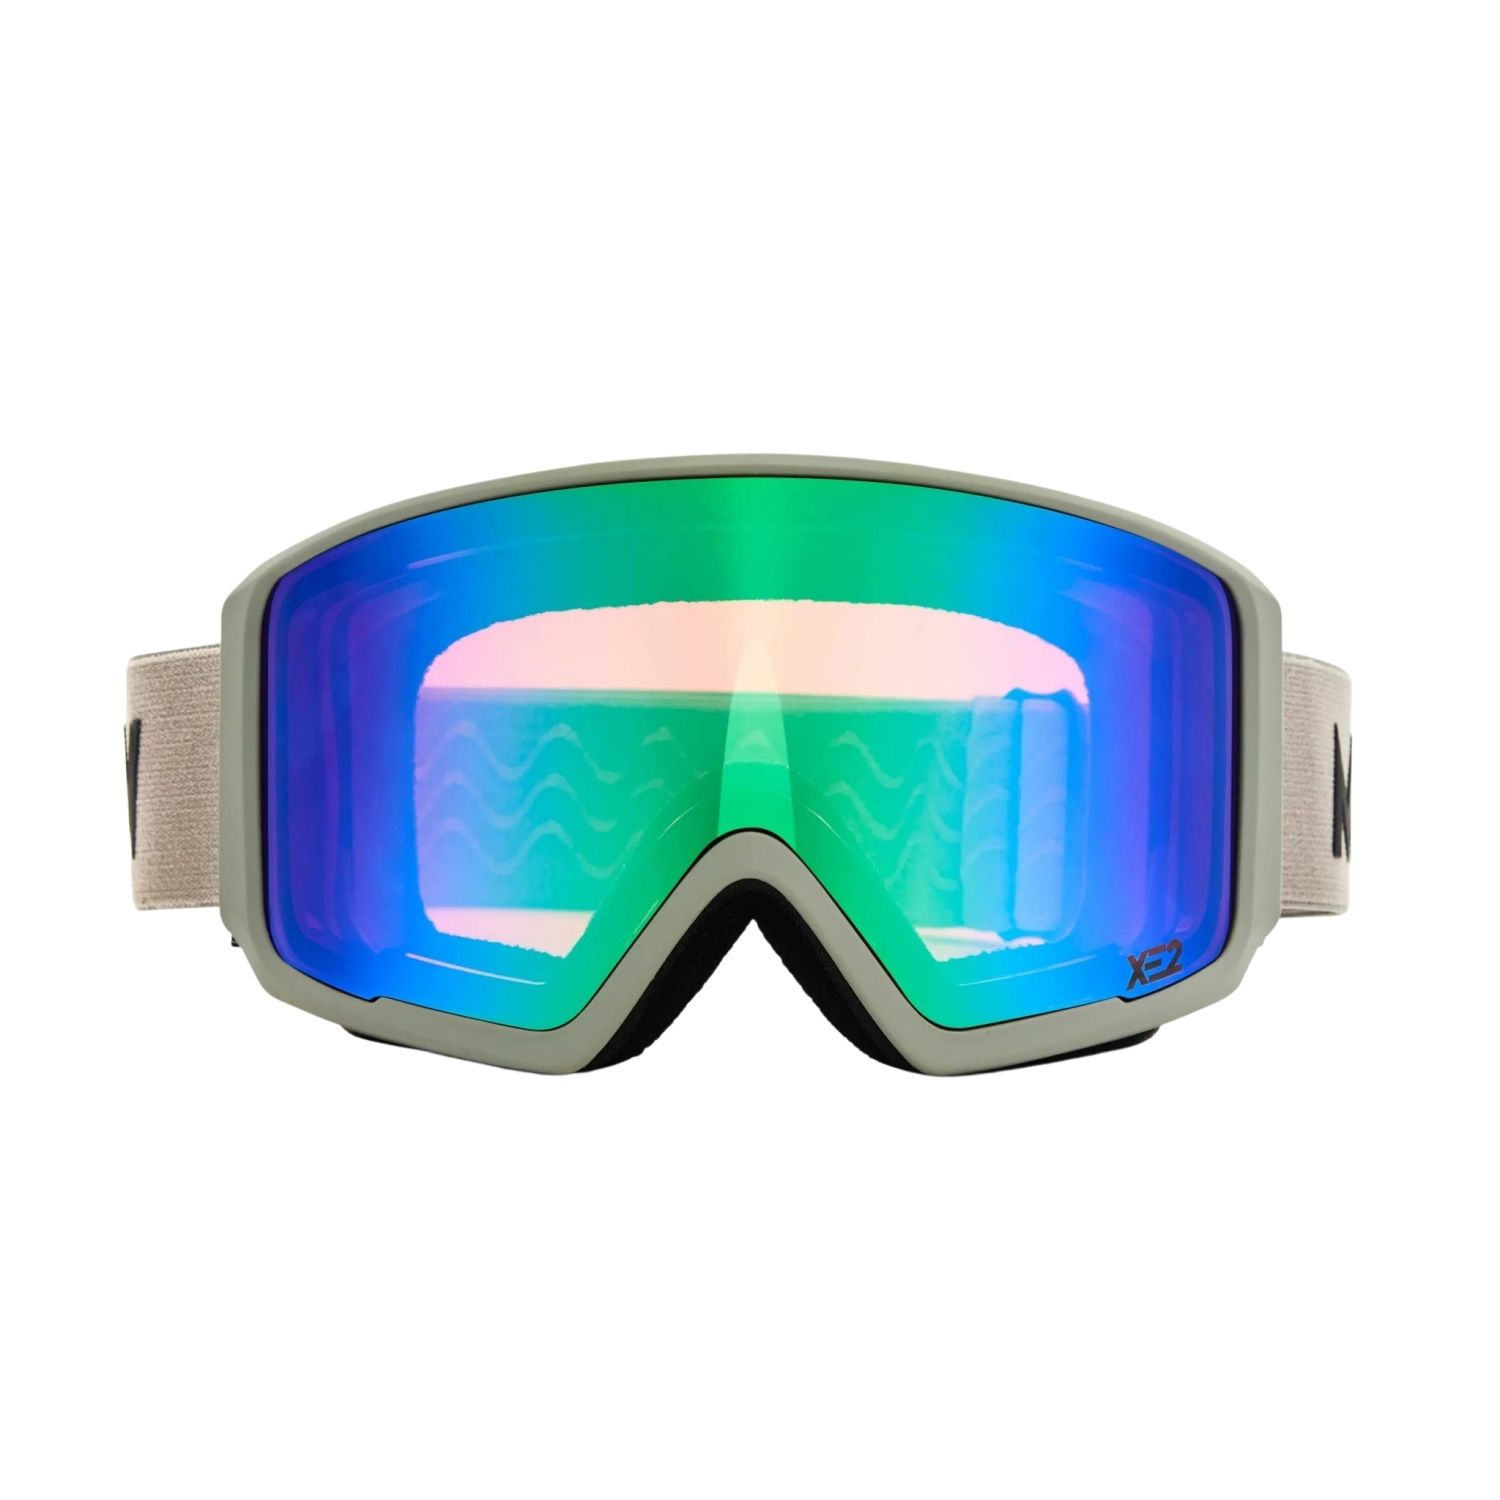 MessyWeekend Flip XE2, ski goggles, light grey